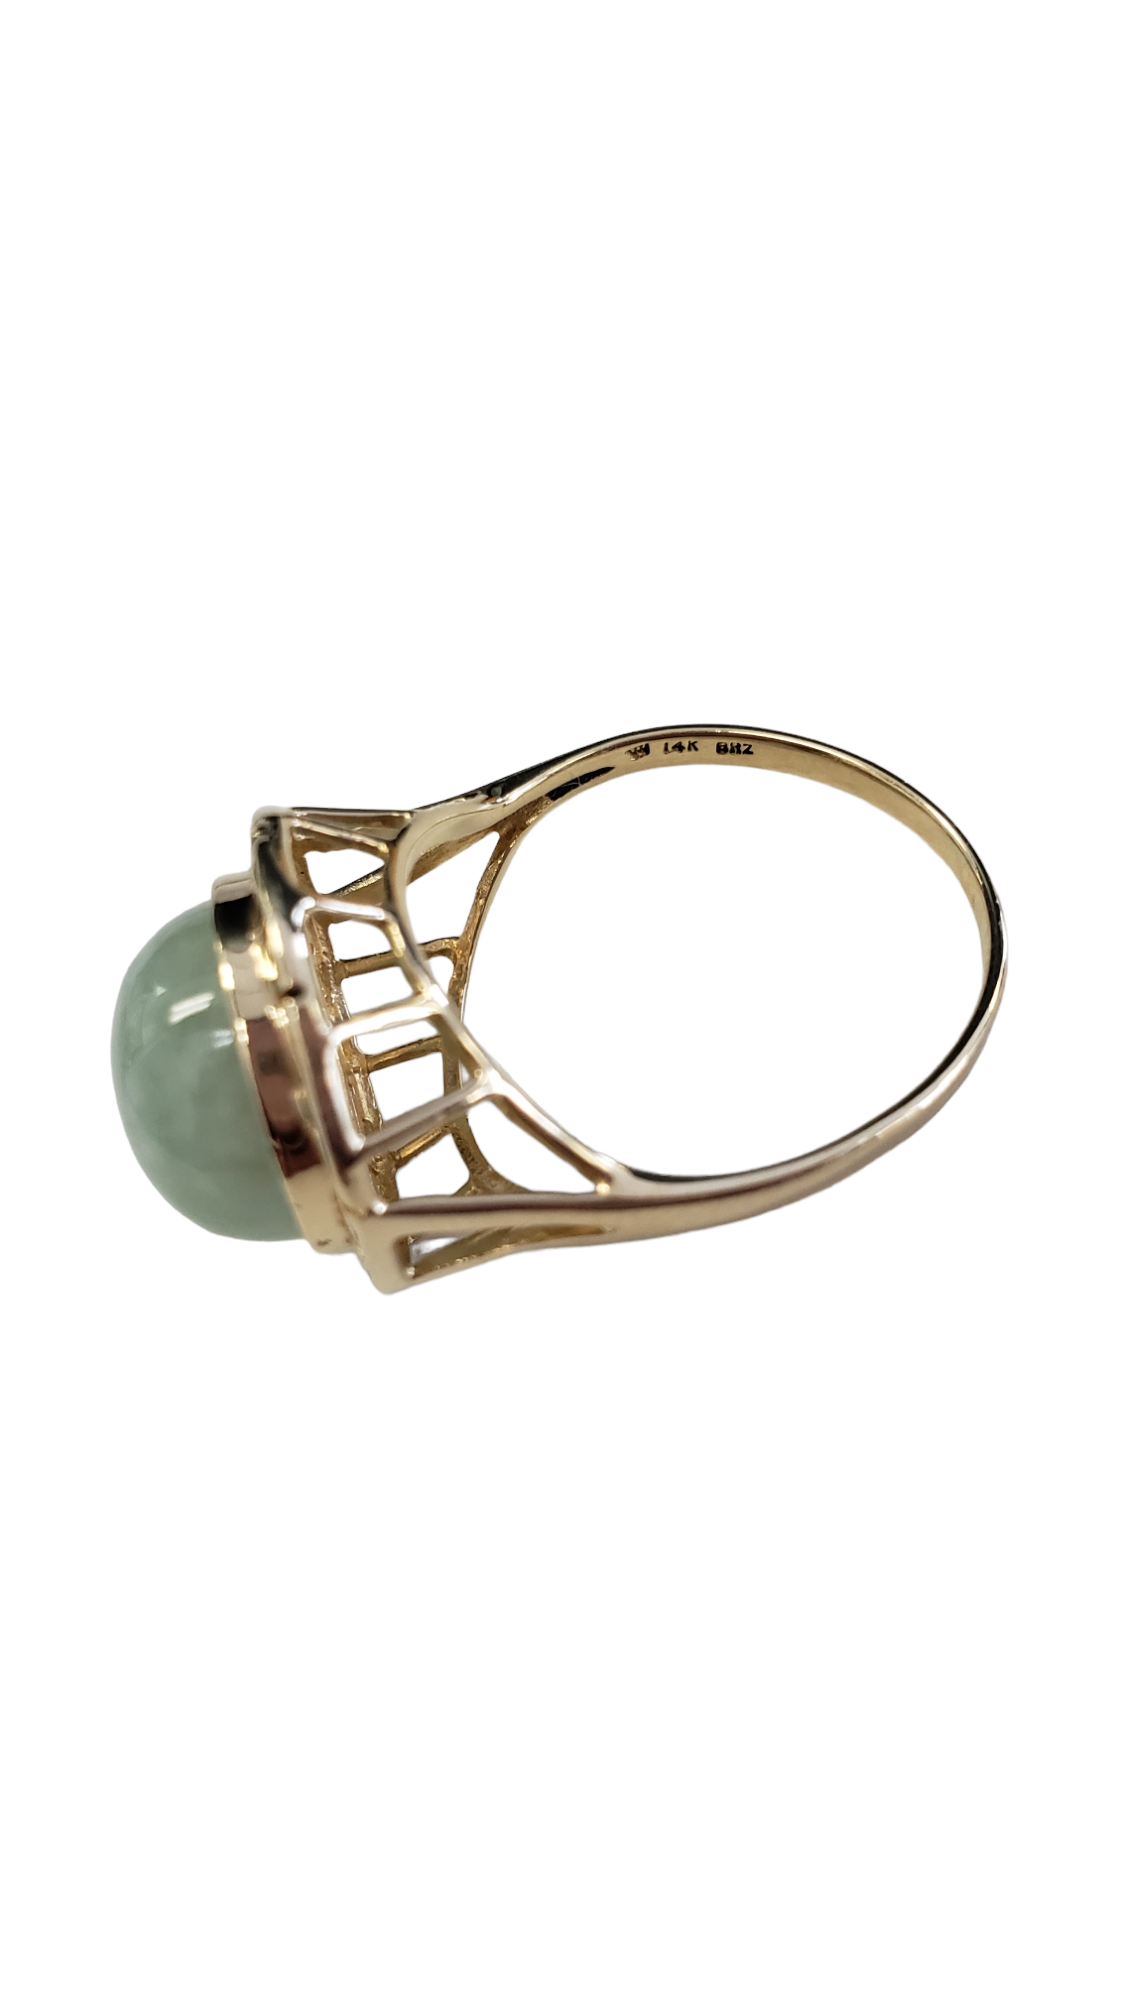 Cabochon Round Green Jade Greek Key Style Ring made in 14-Karat Yellow Gold